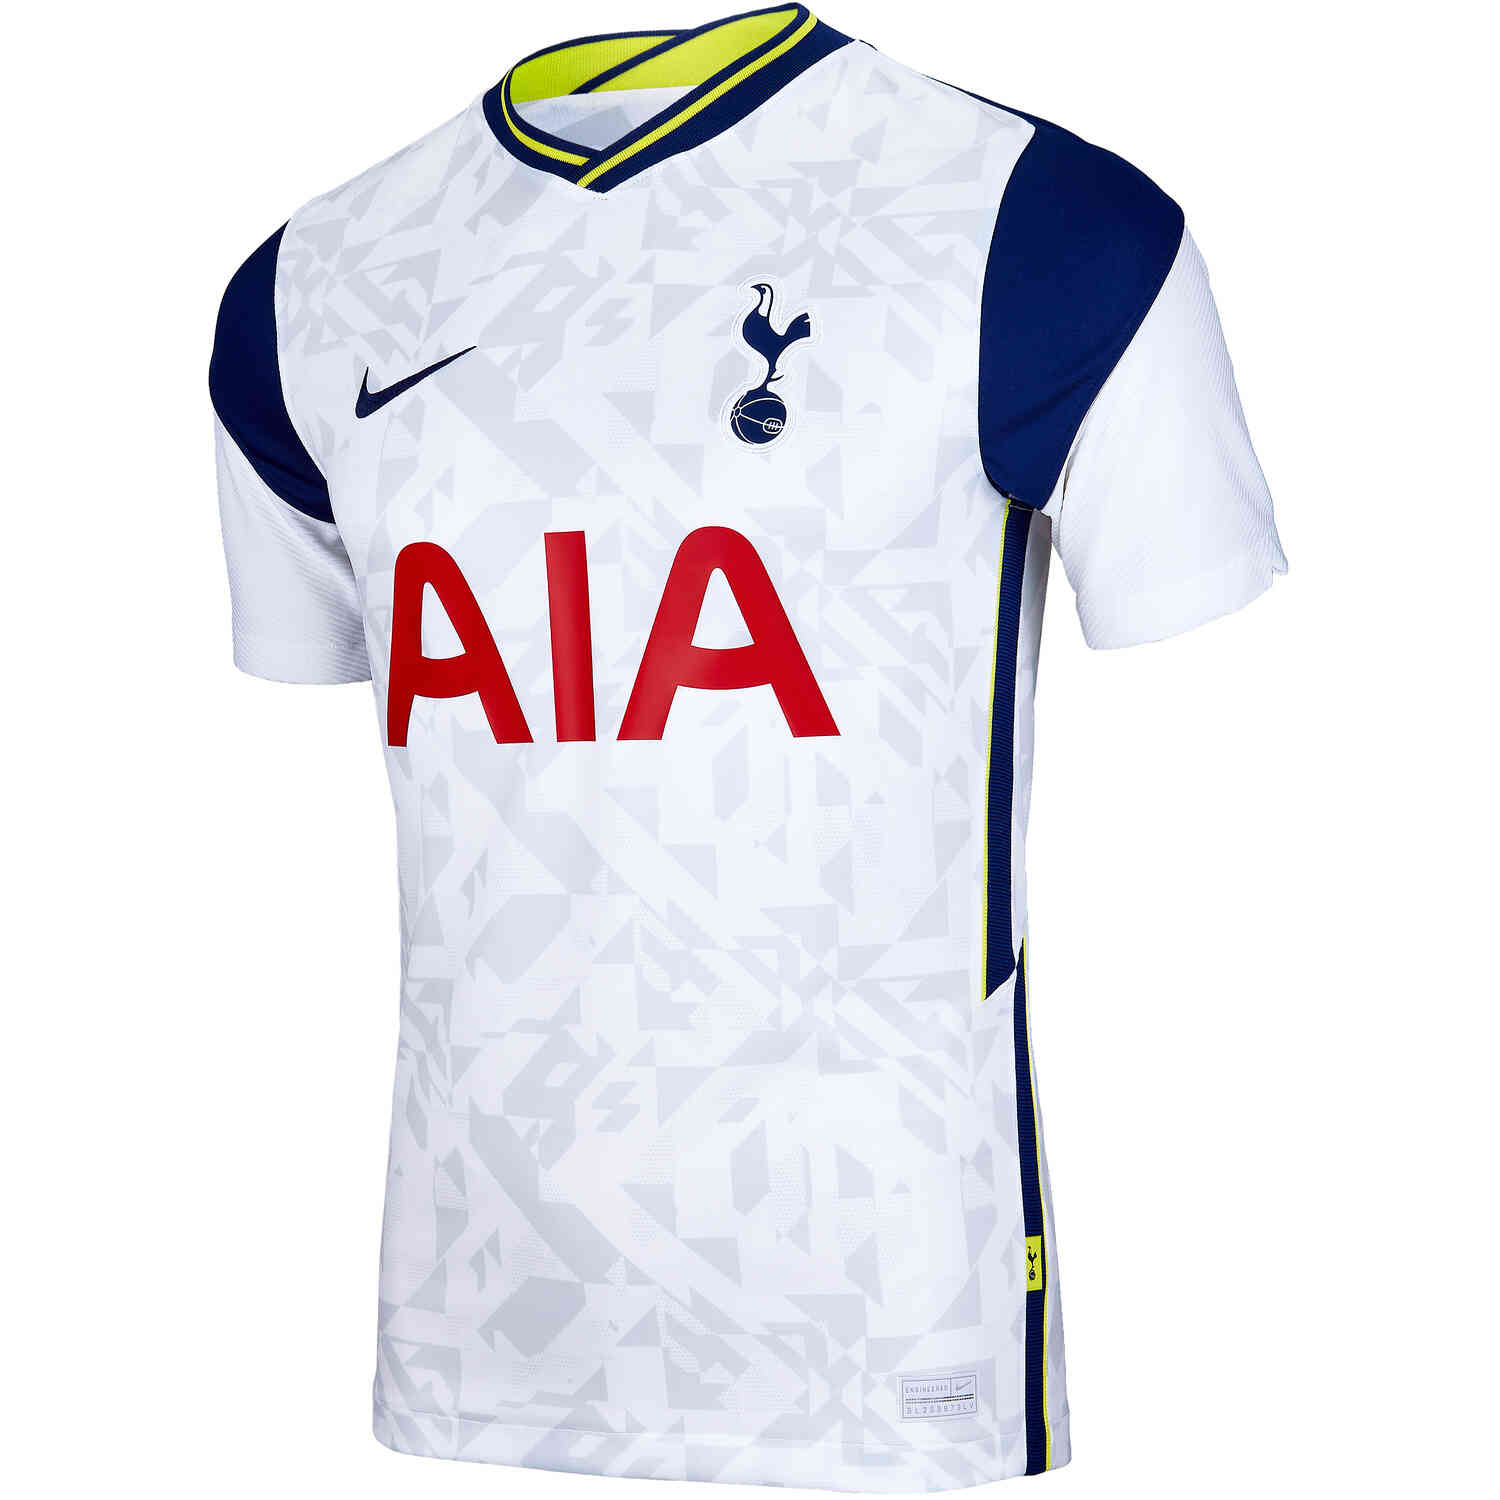 Tottenham Jersey 2020/21 : * 2020-21 Tottenham home jersey - $17.00